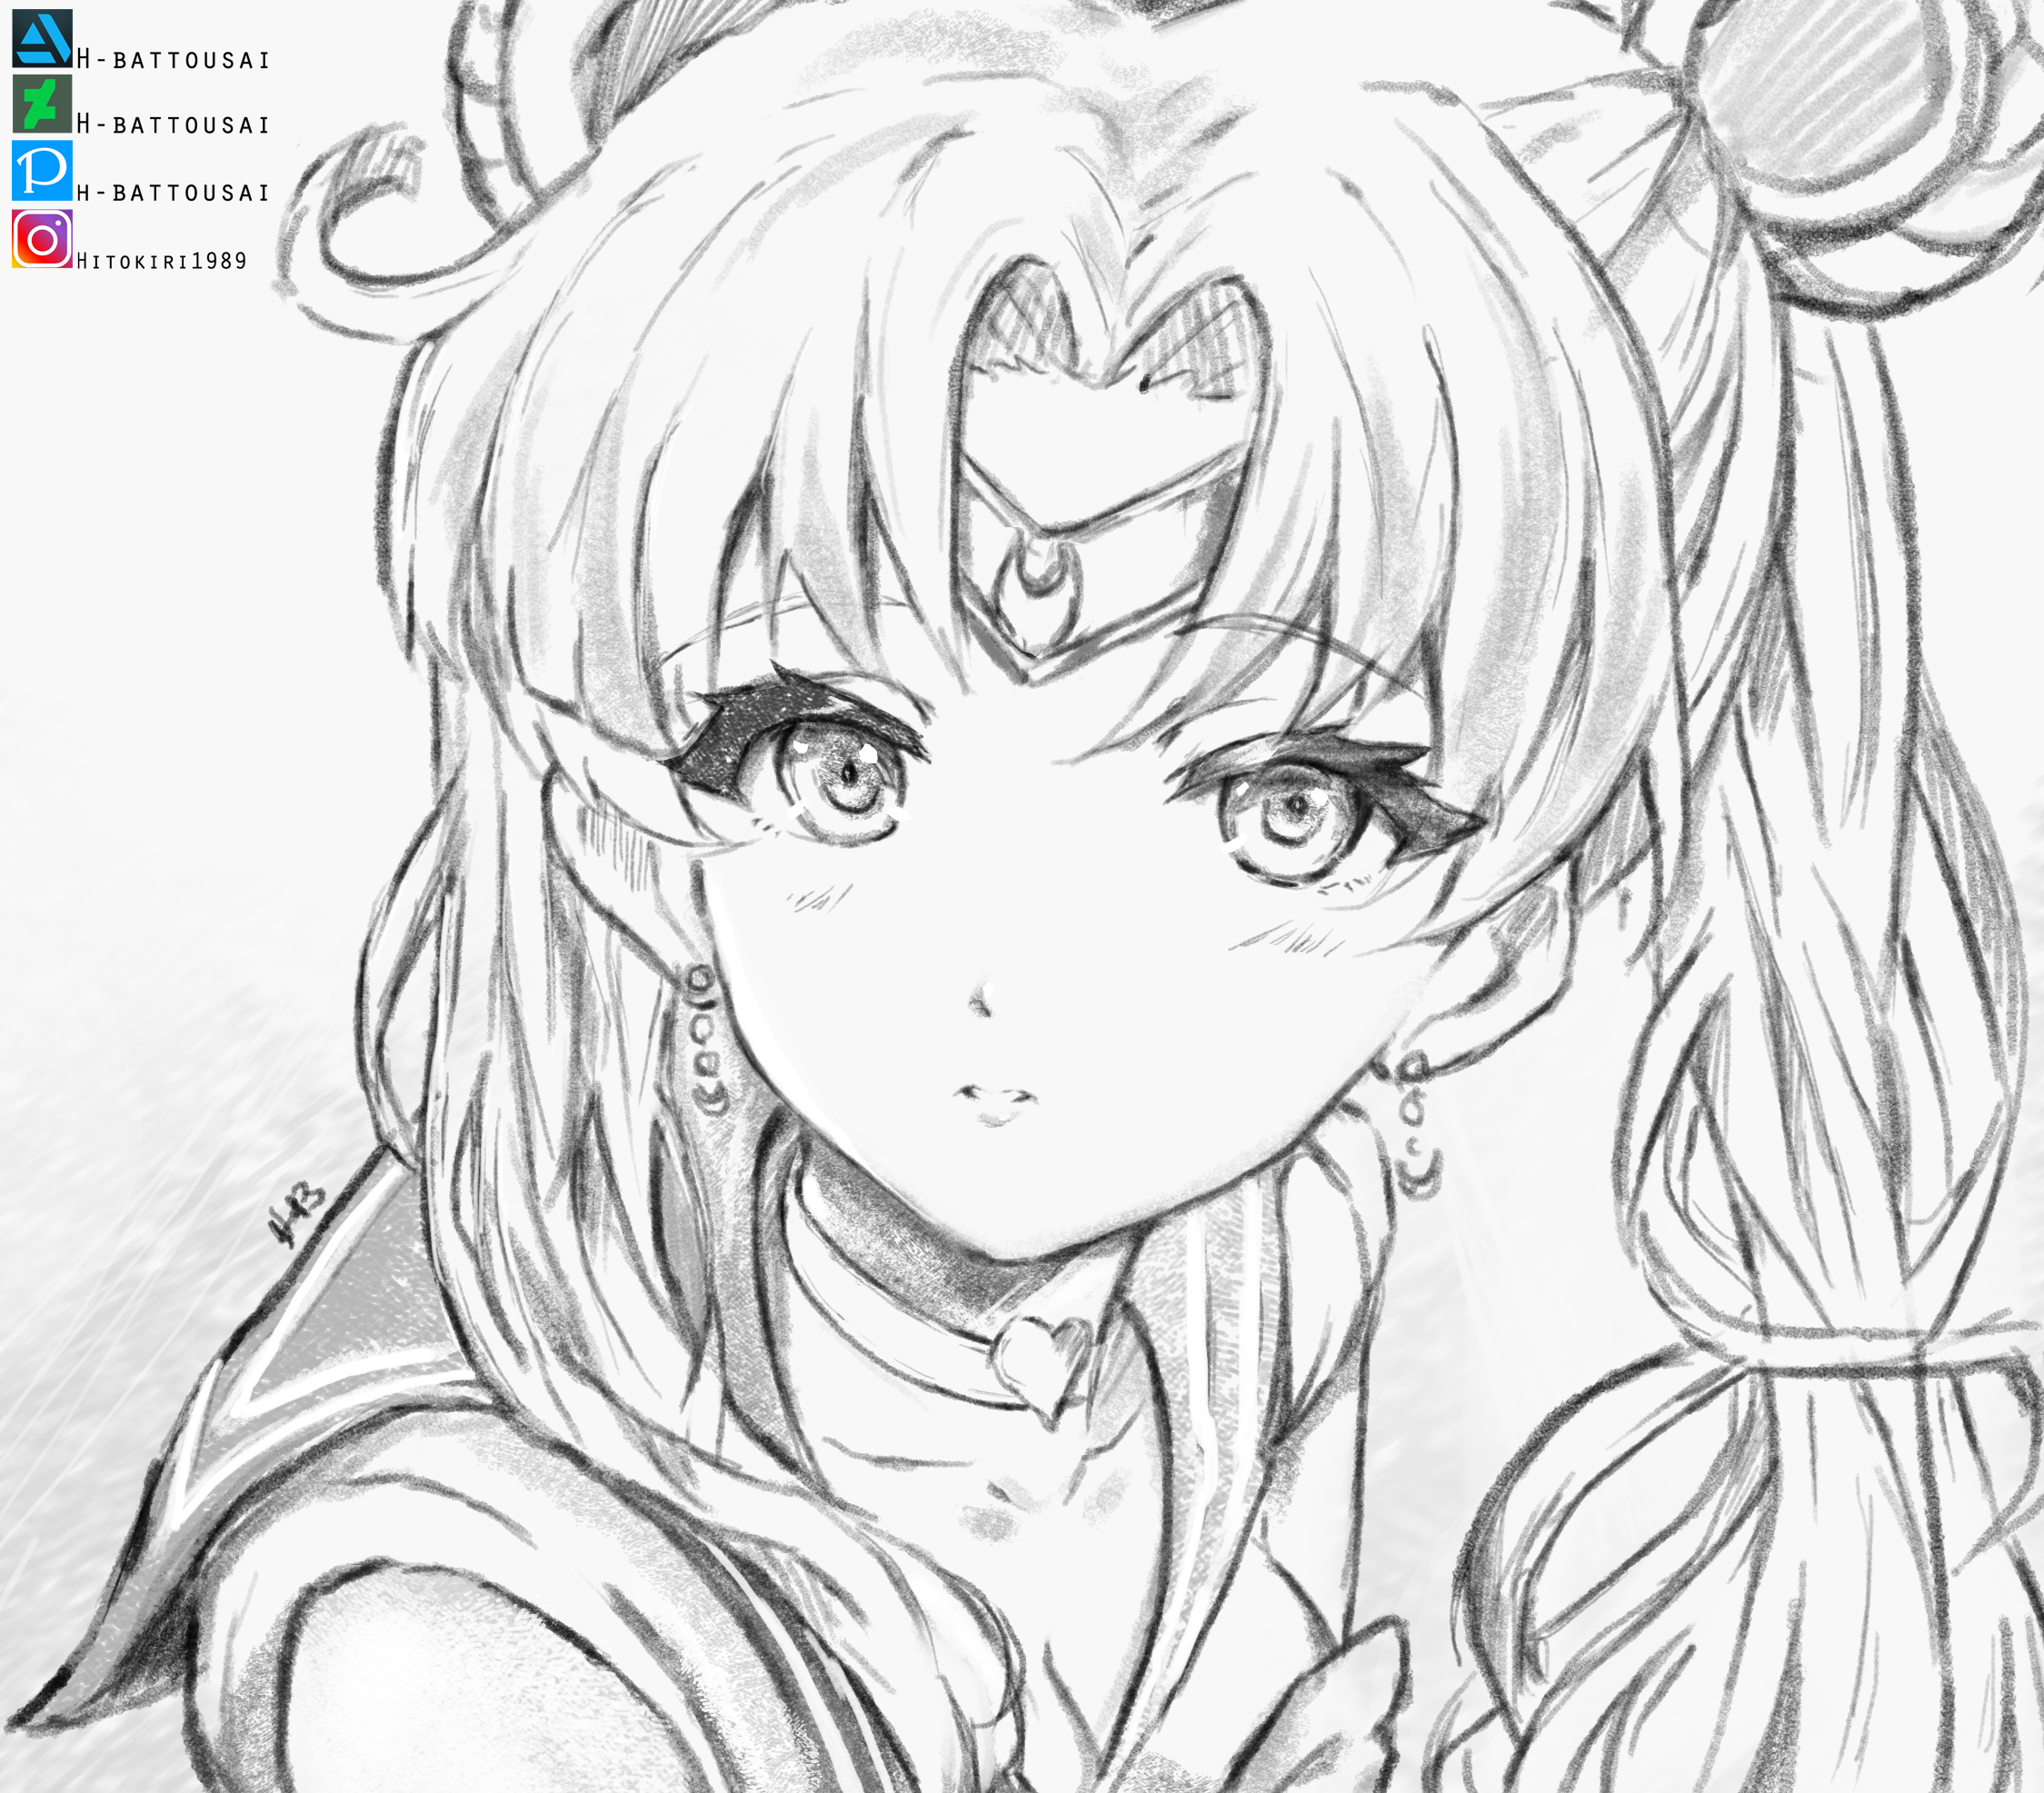 Sailor moon插画图片壁纸